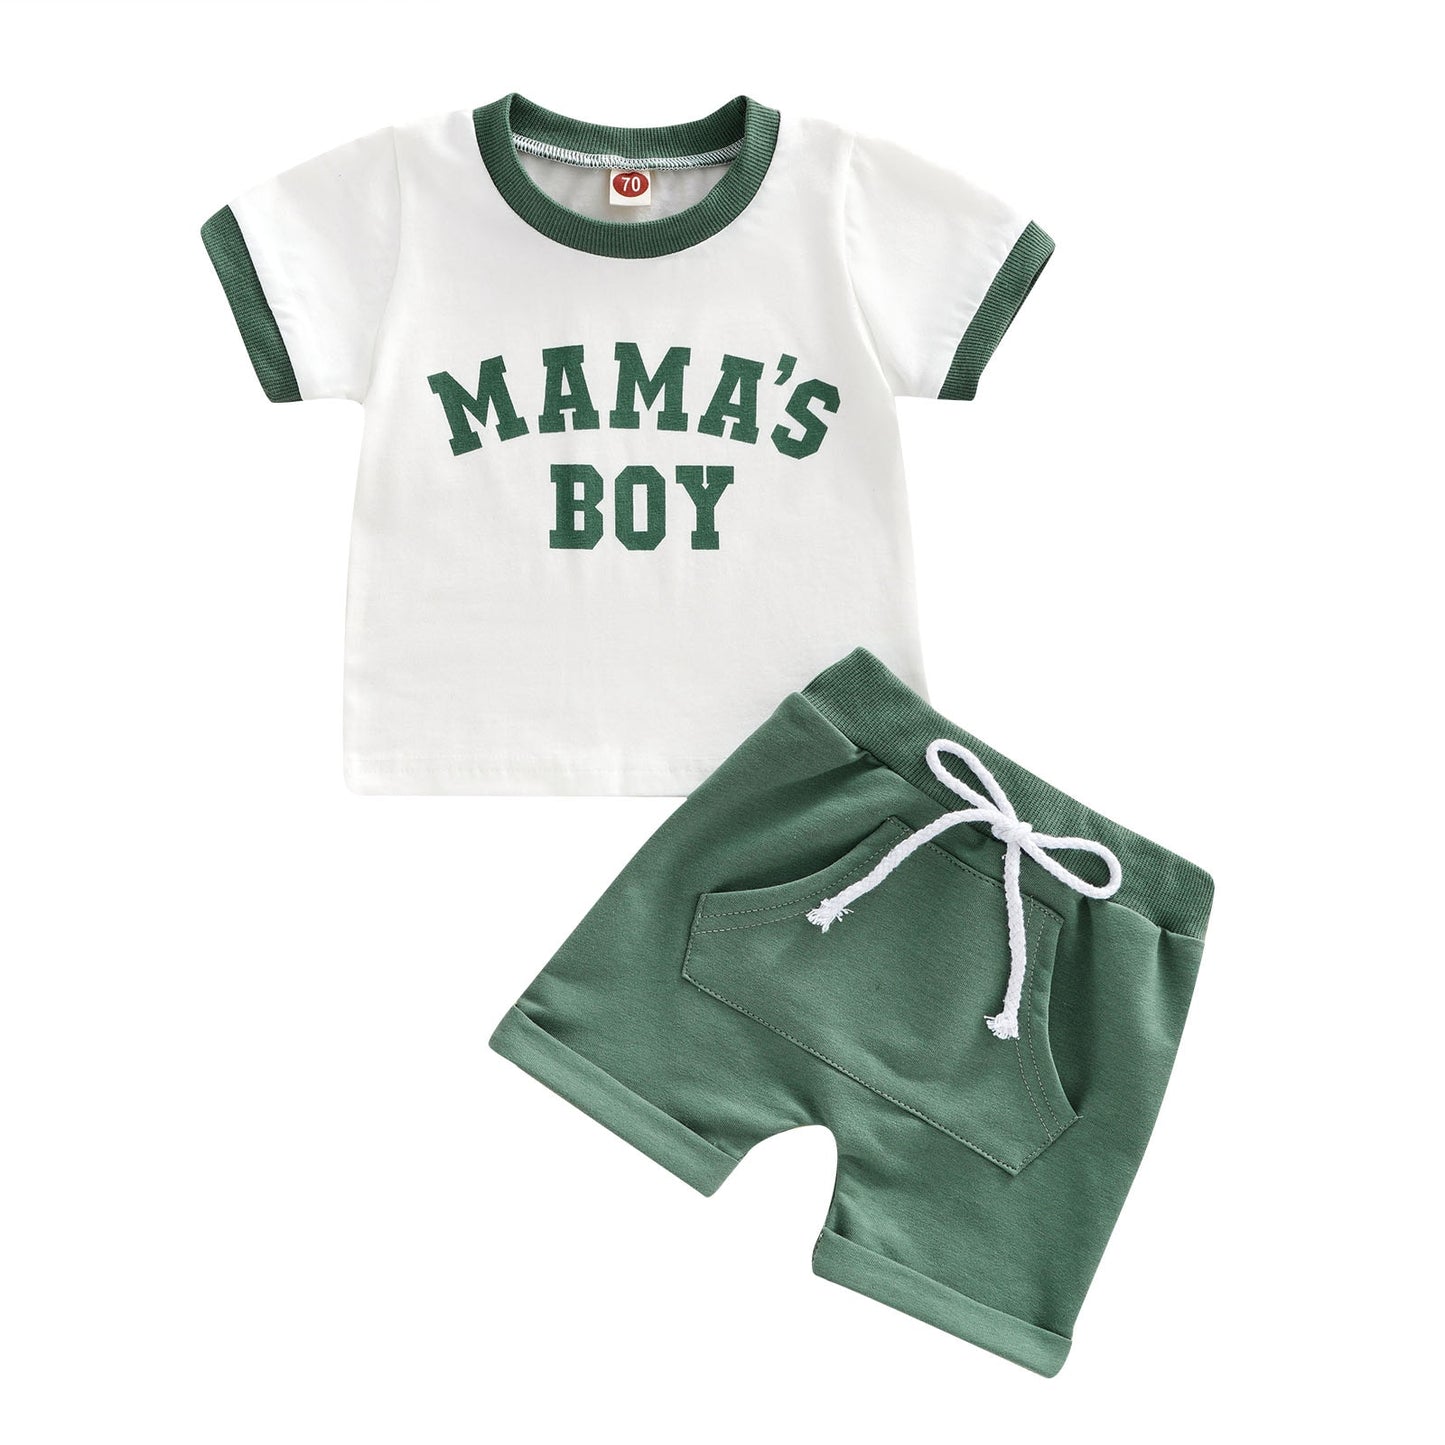 Mama's Boy Short-Sleeve Set